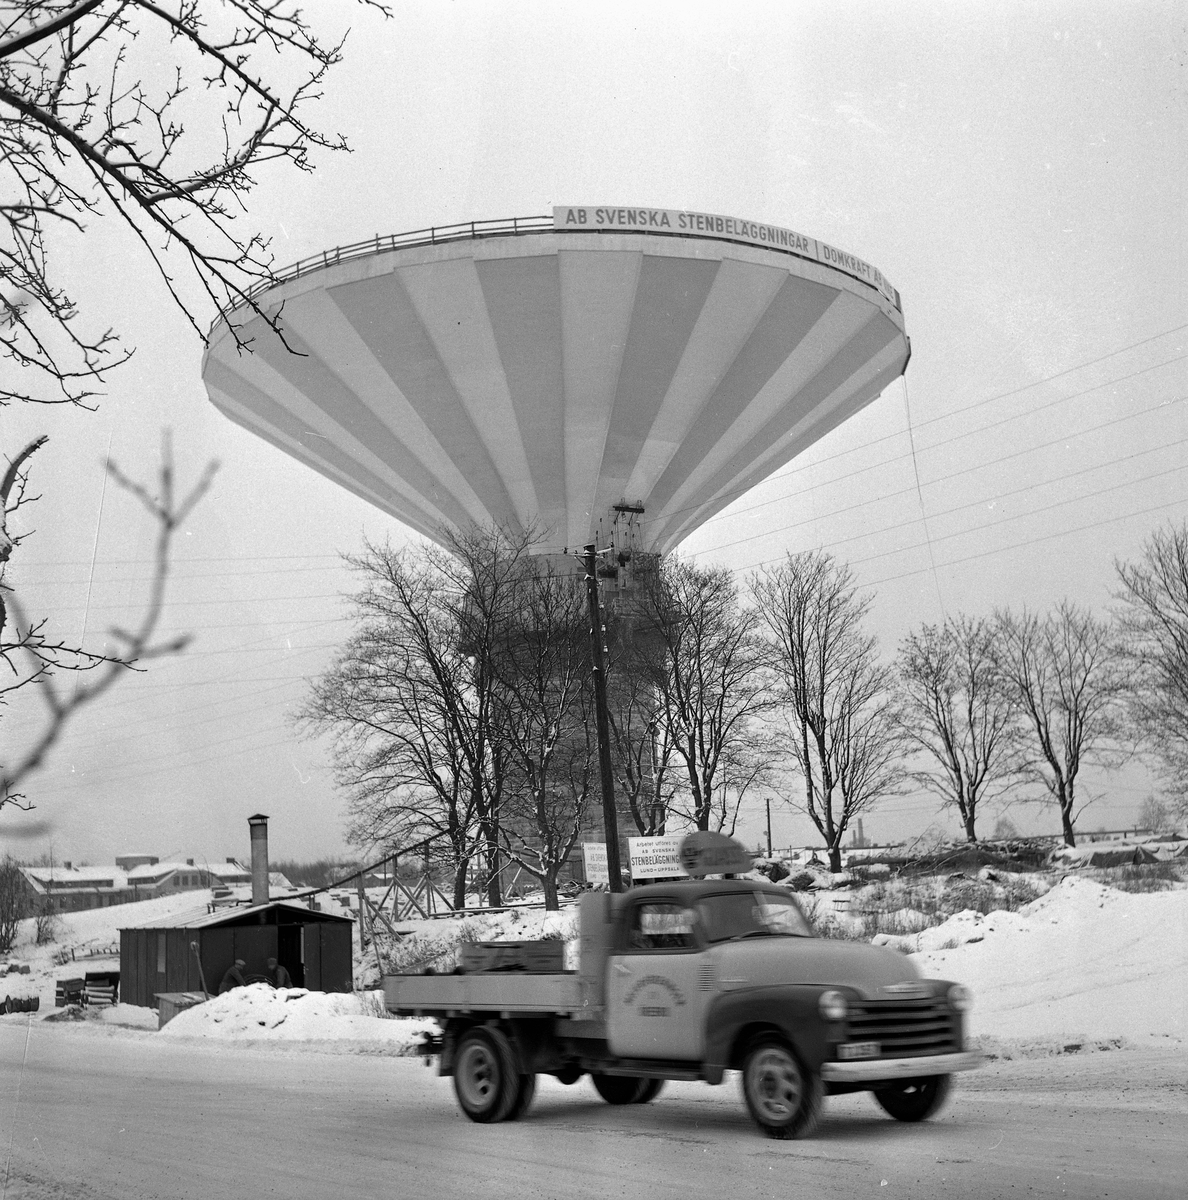 Nya vattentornet på norr.
Januari 1957.